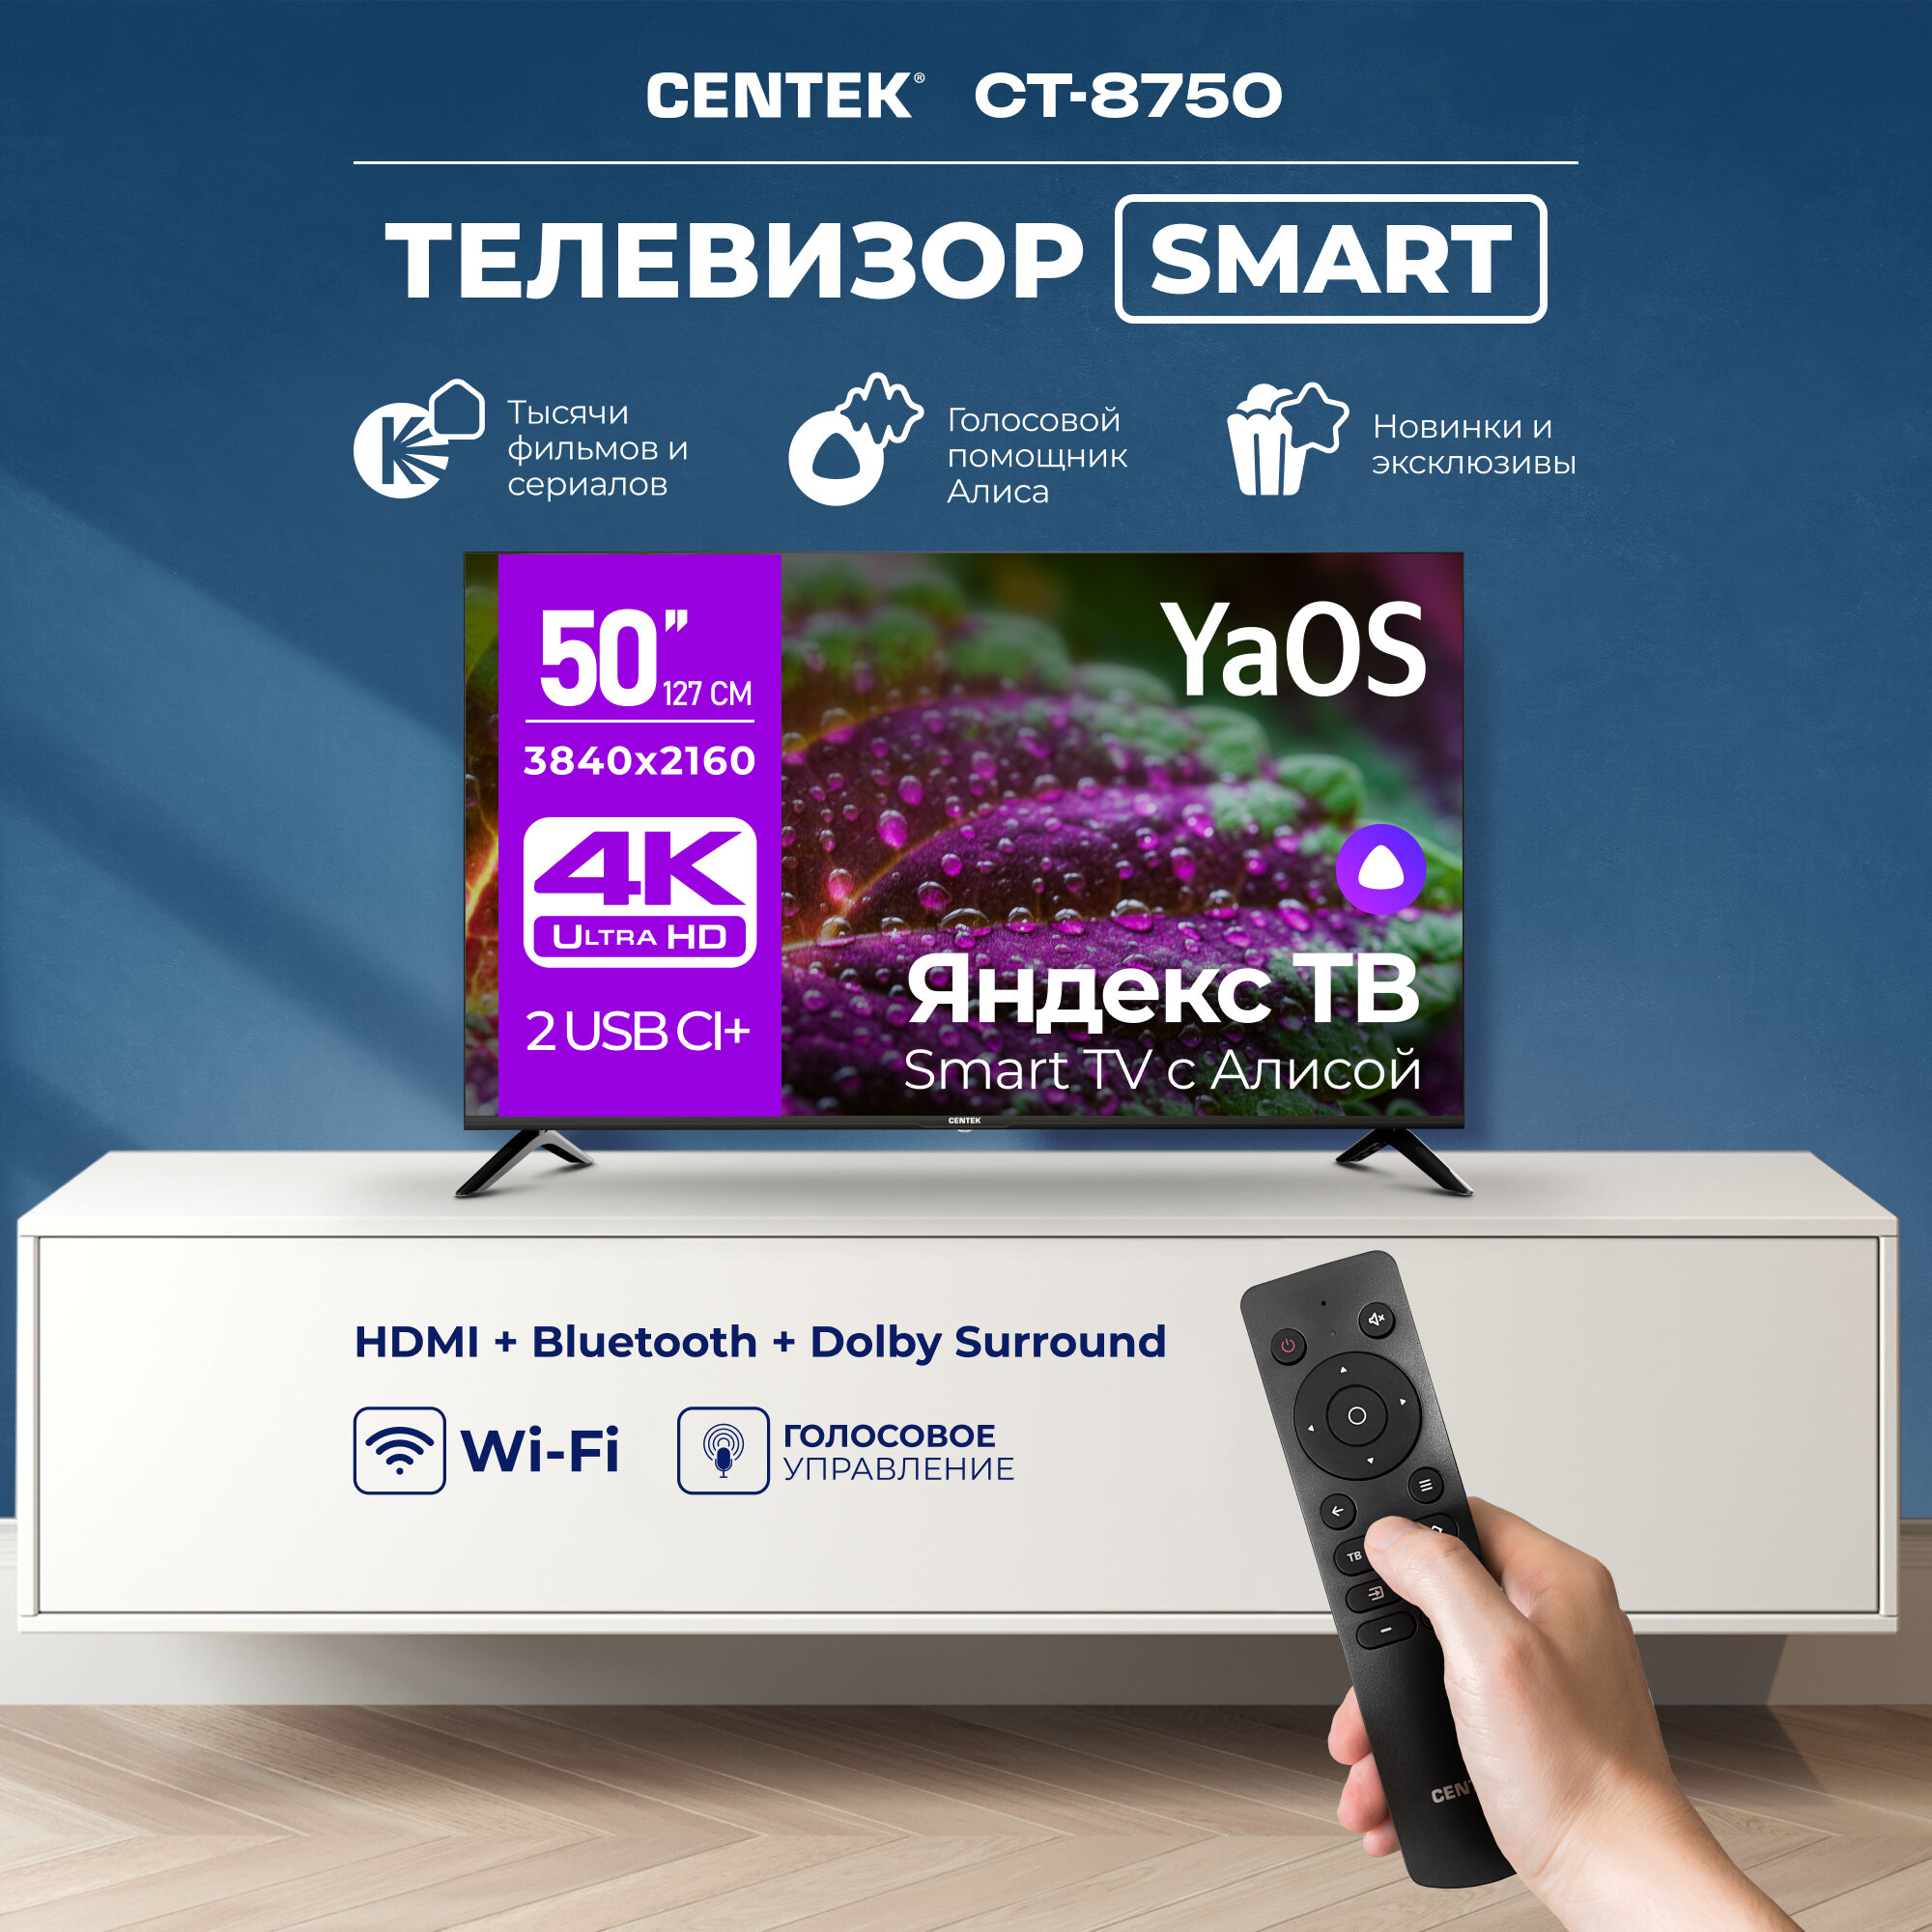 Телевизор Centek CT-8750, 50 дюймов с поддержкой 4К Ultra HD, Wi-Fi и Bluetooth, Яндекс YaOS